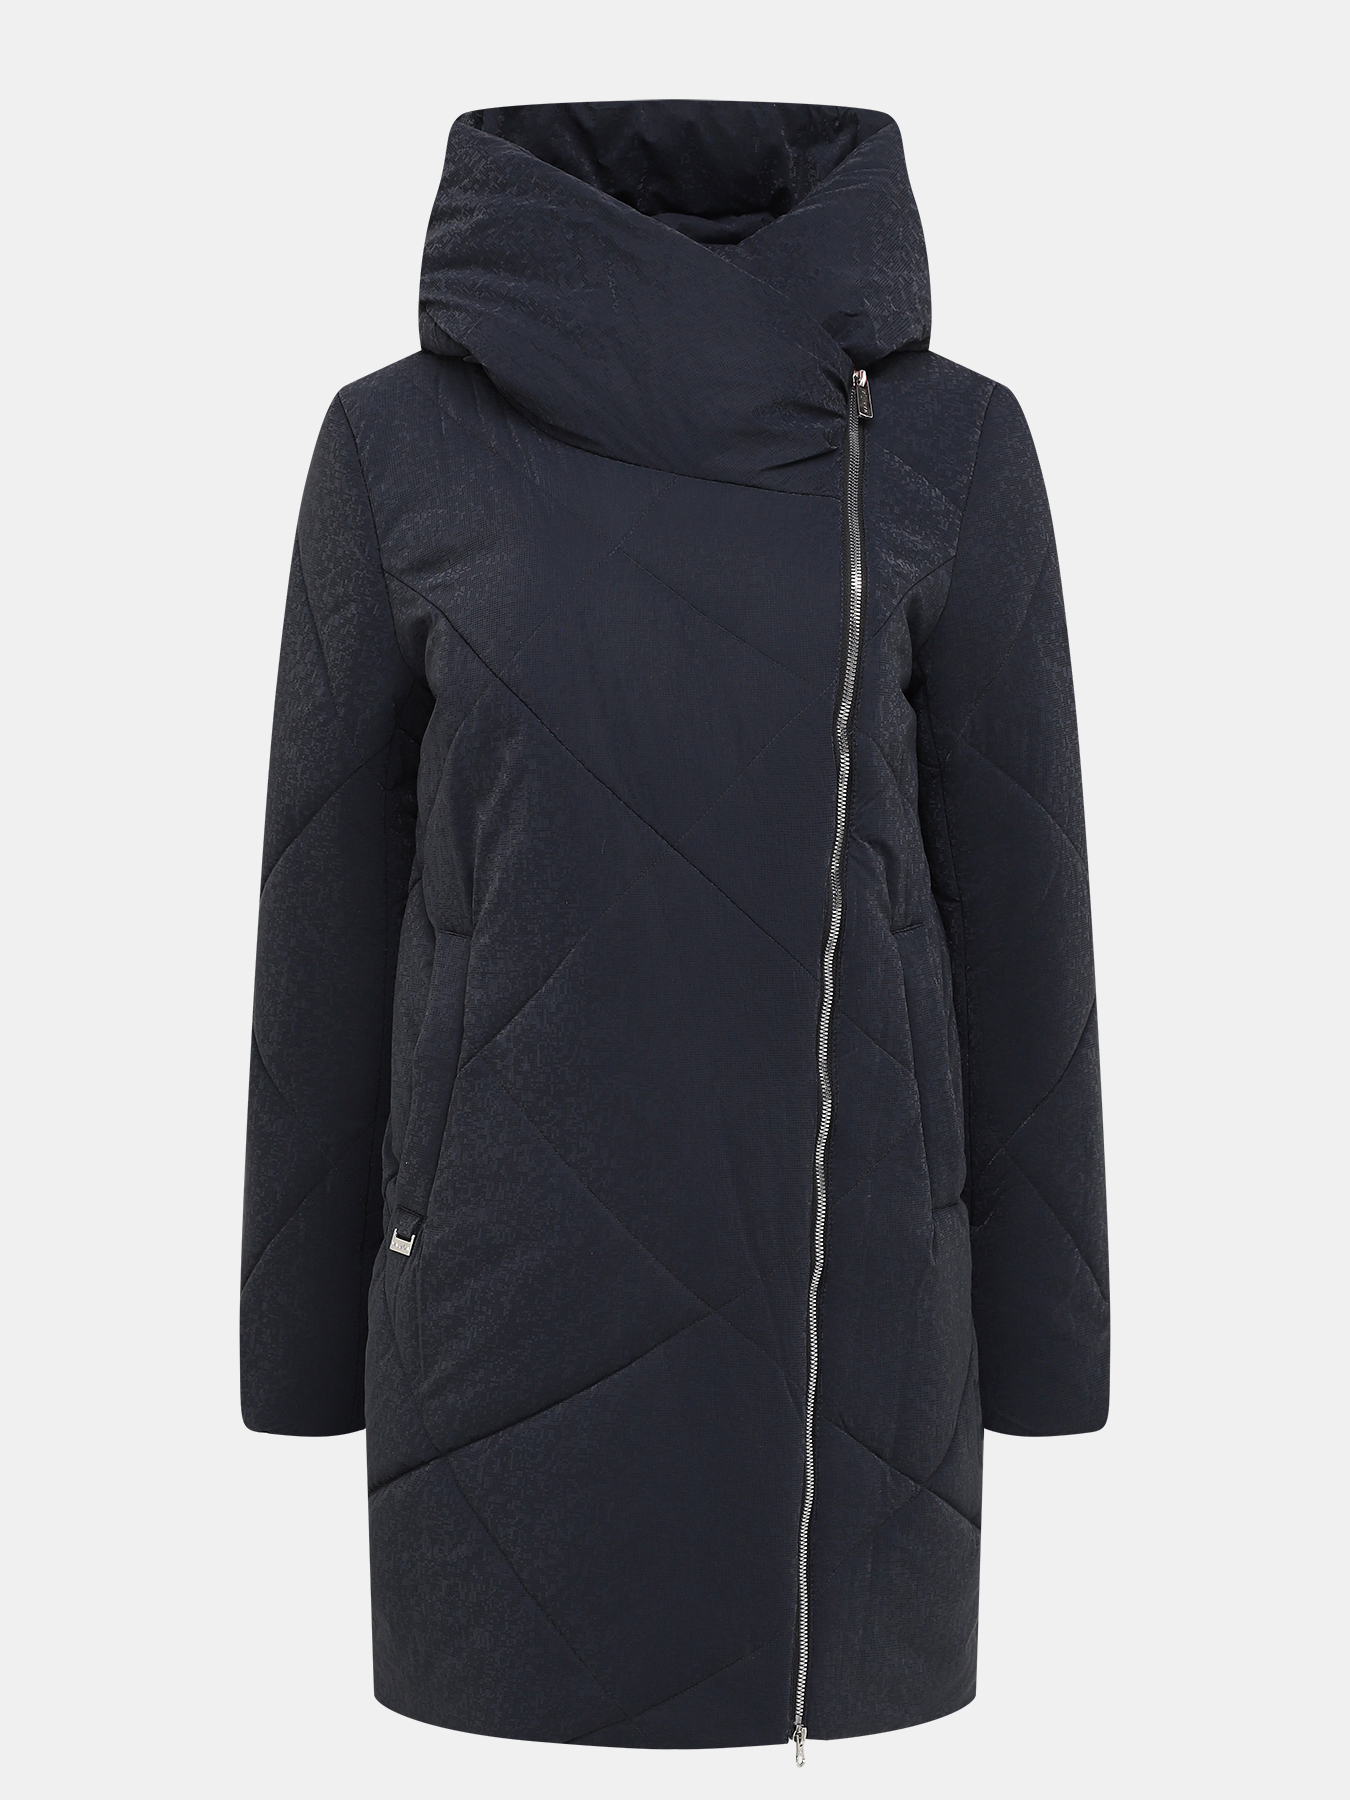 Пальто зимнее Maritta 433549-021, цвет темно-синий, размер 46